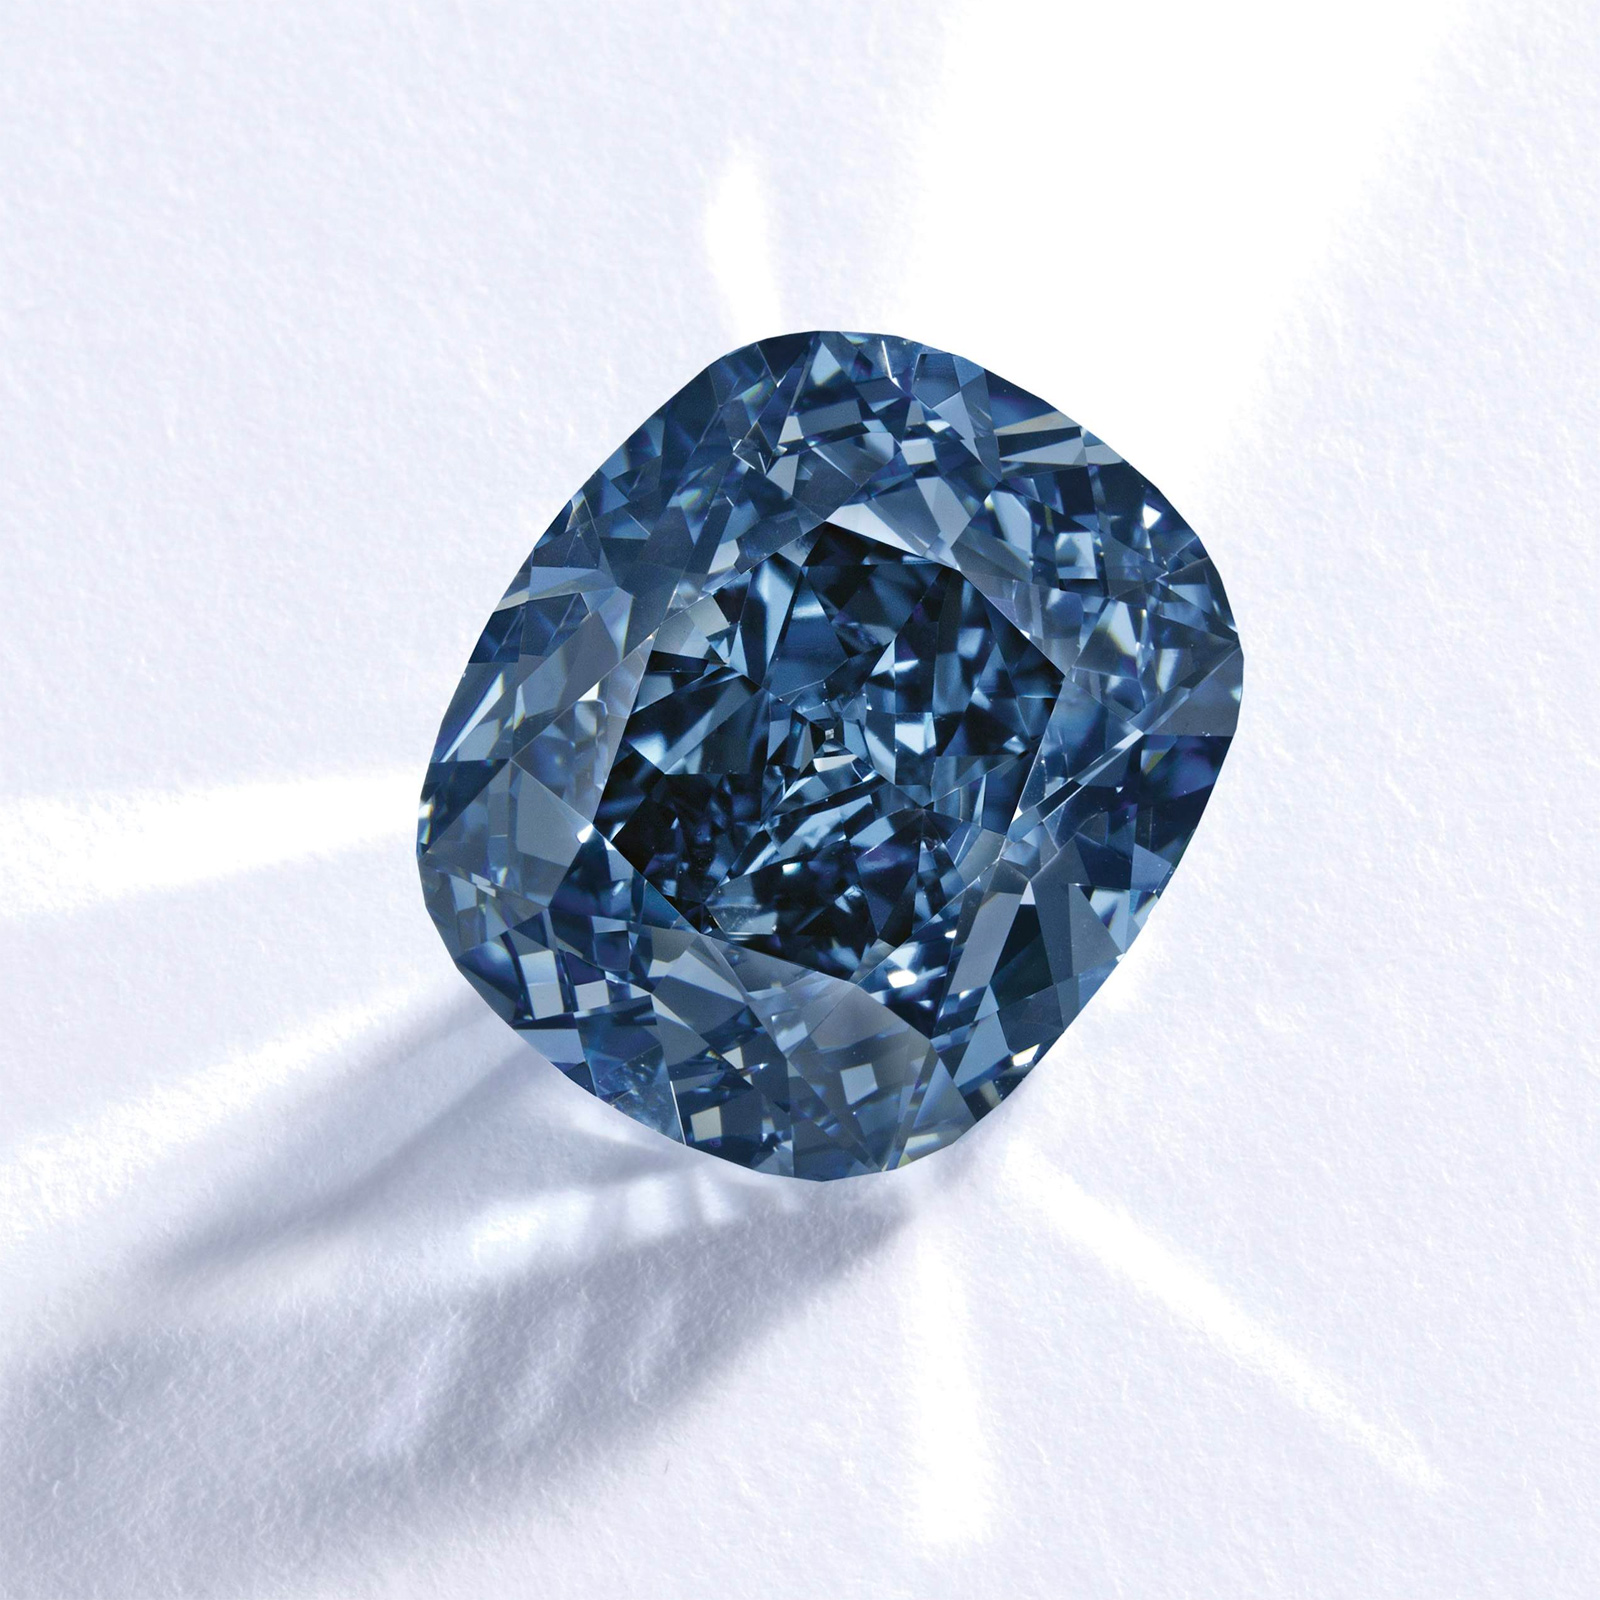 The 12.03 carat Blue Moon of Josephine diamond